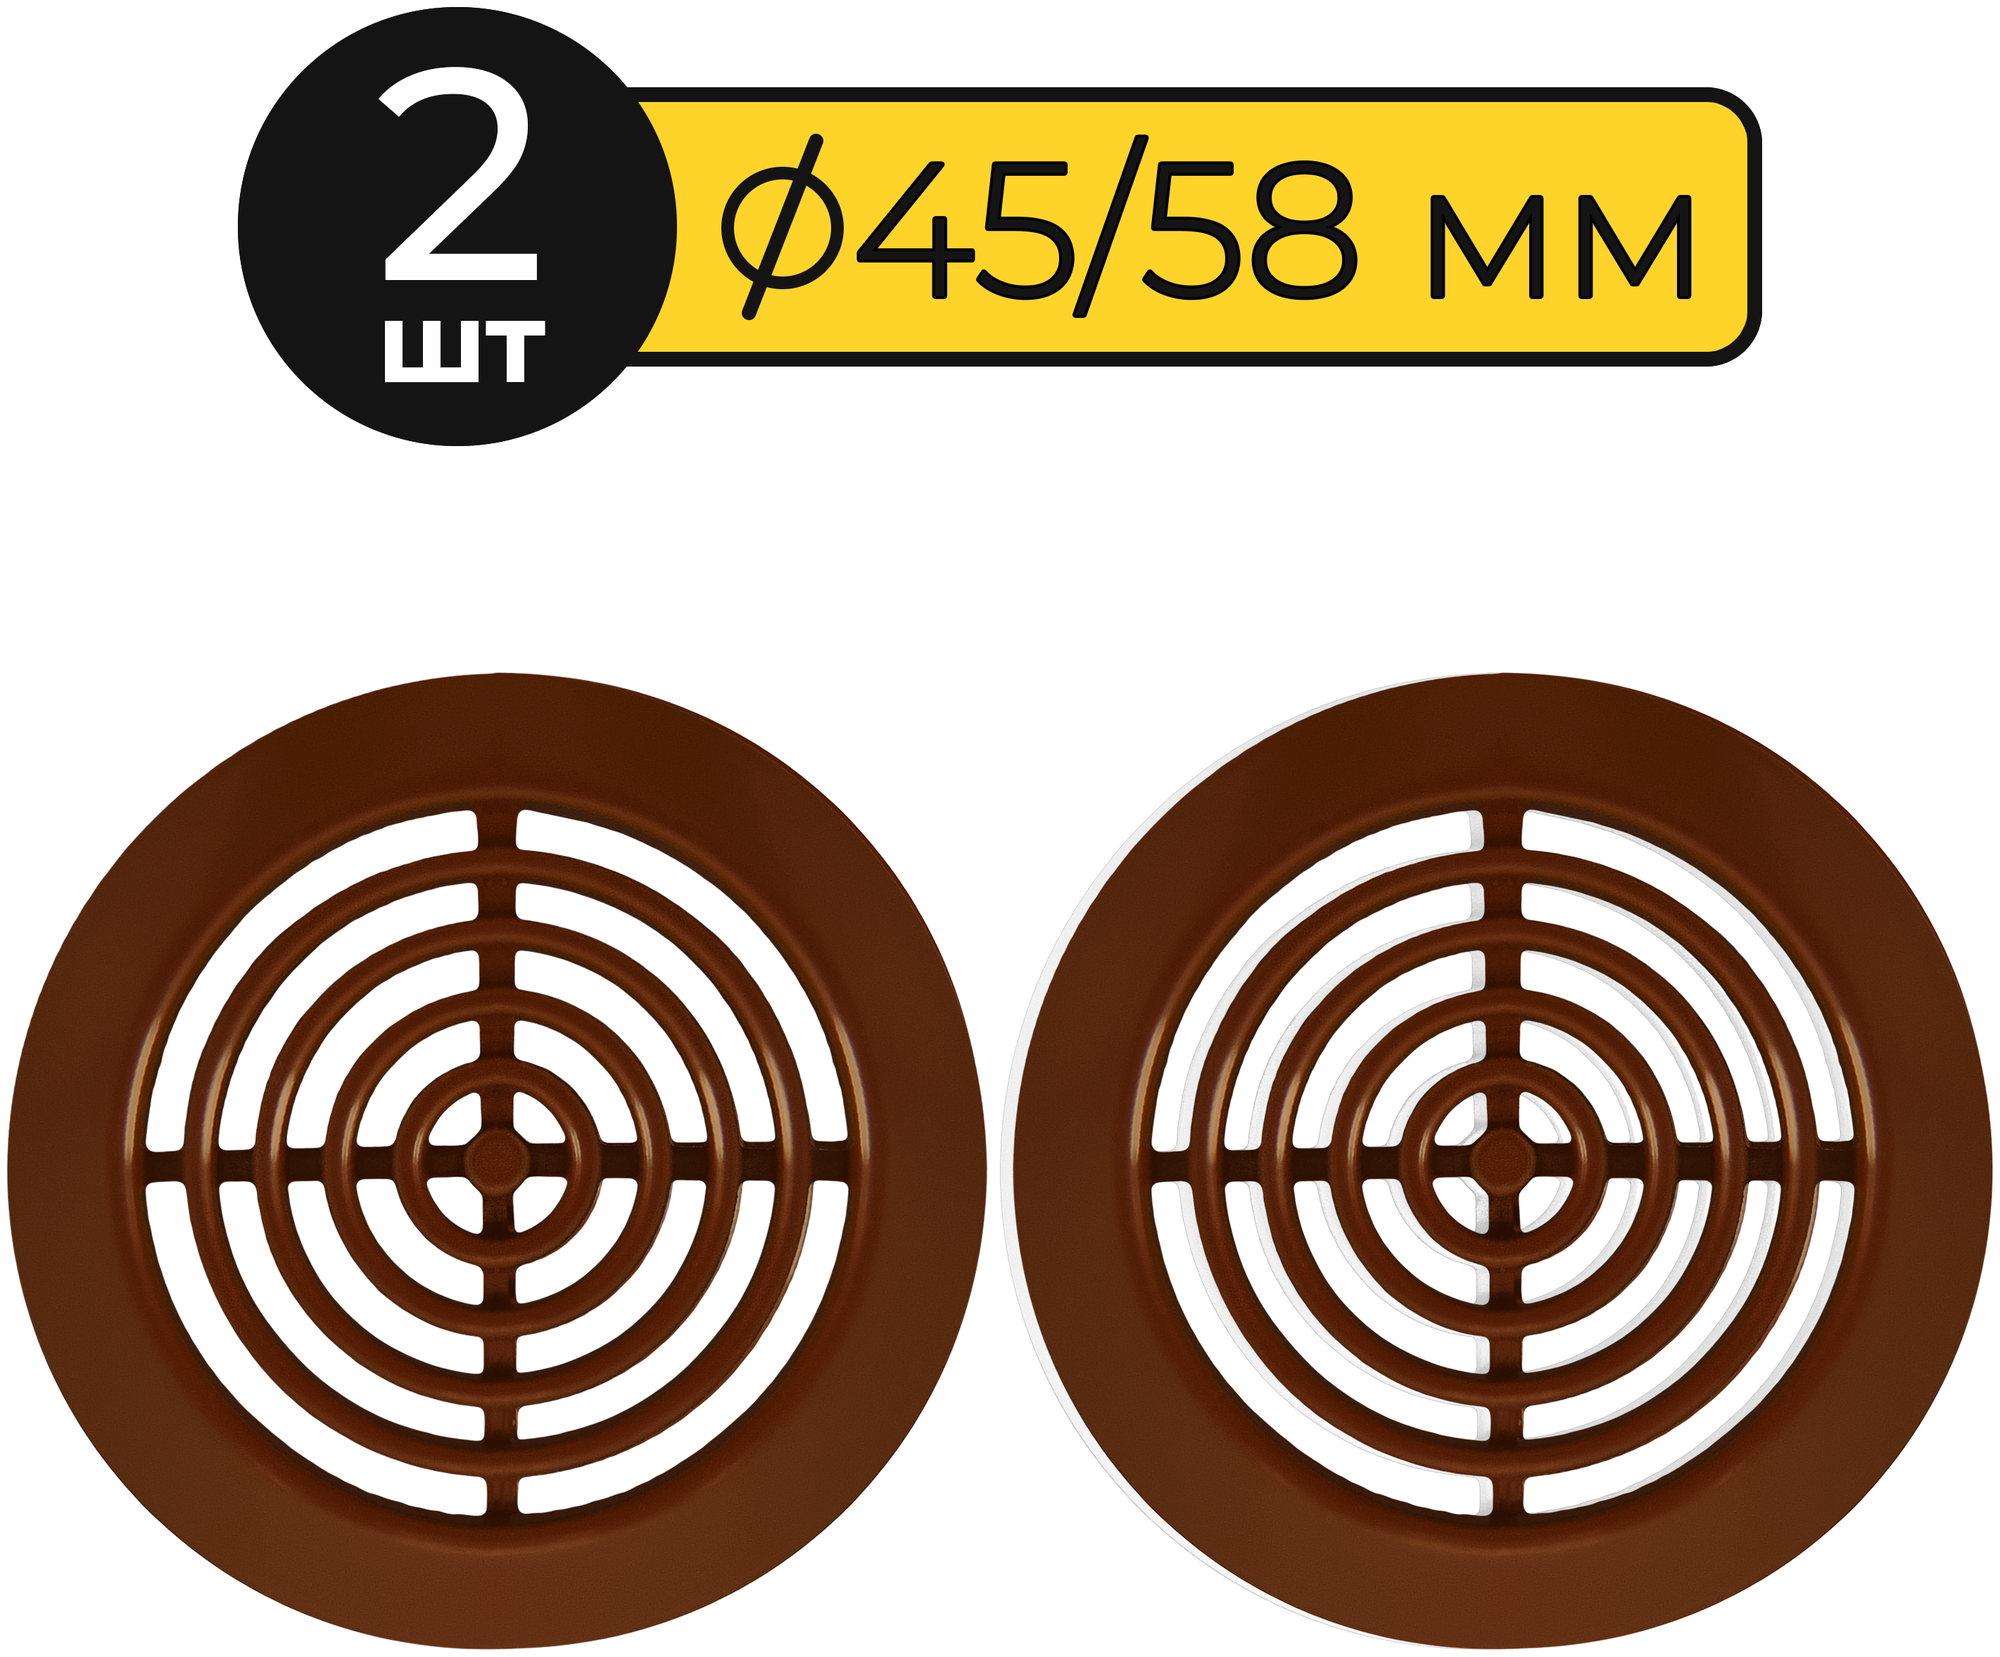 Решетка вентиляционная 2 шт Awenta RM Т73 диаметр 45/58 пластик коричневая